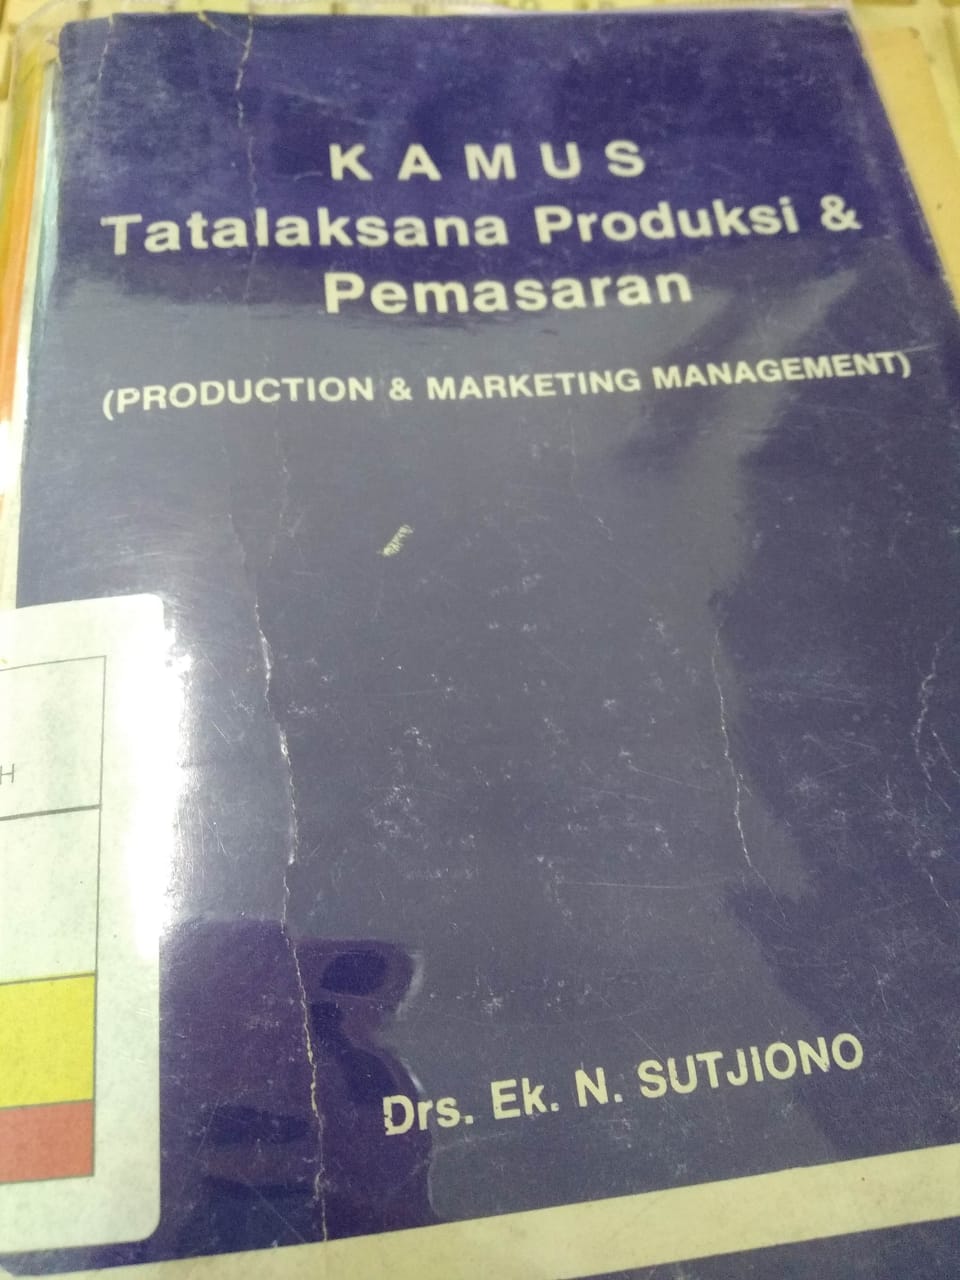 Kamus Production & Marketing Management = Kamus Tatalaksana Produksi & Pemasaran